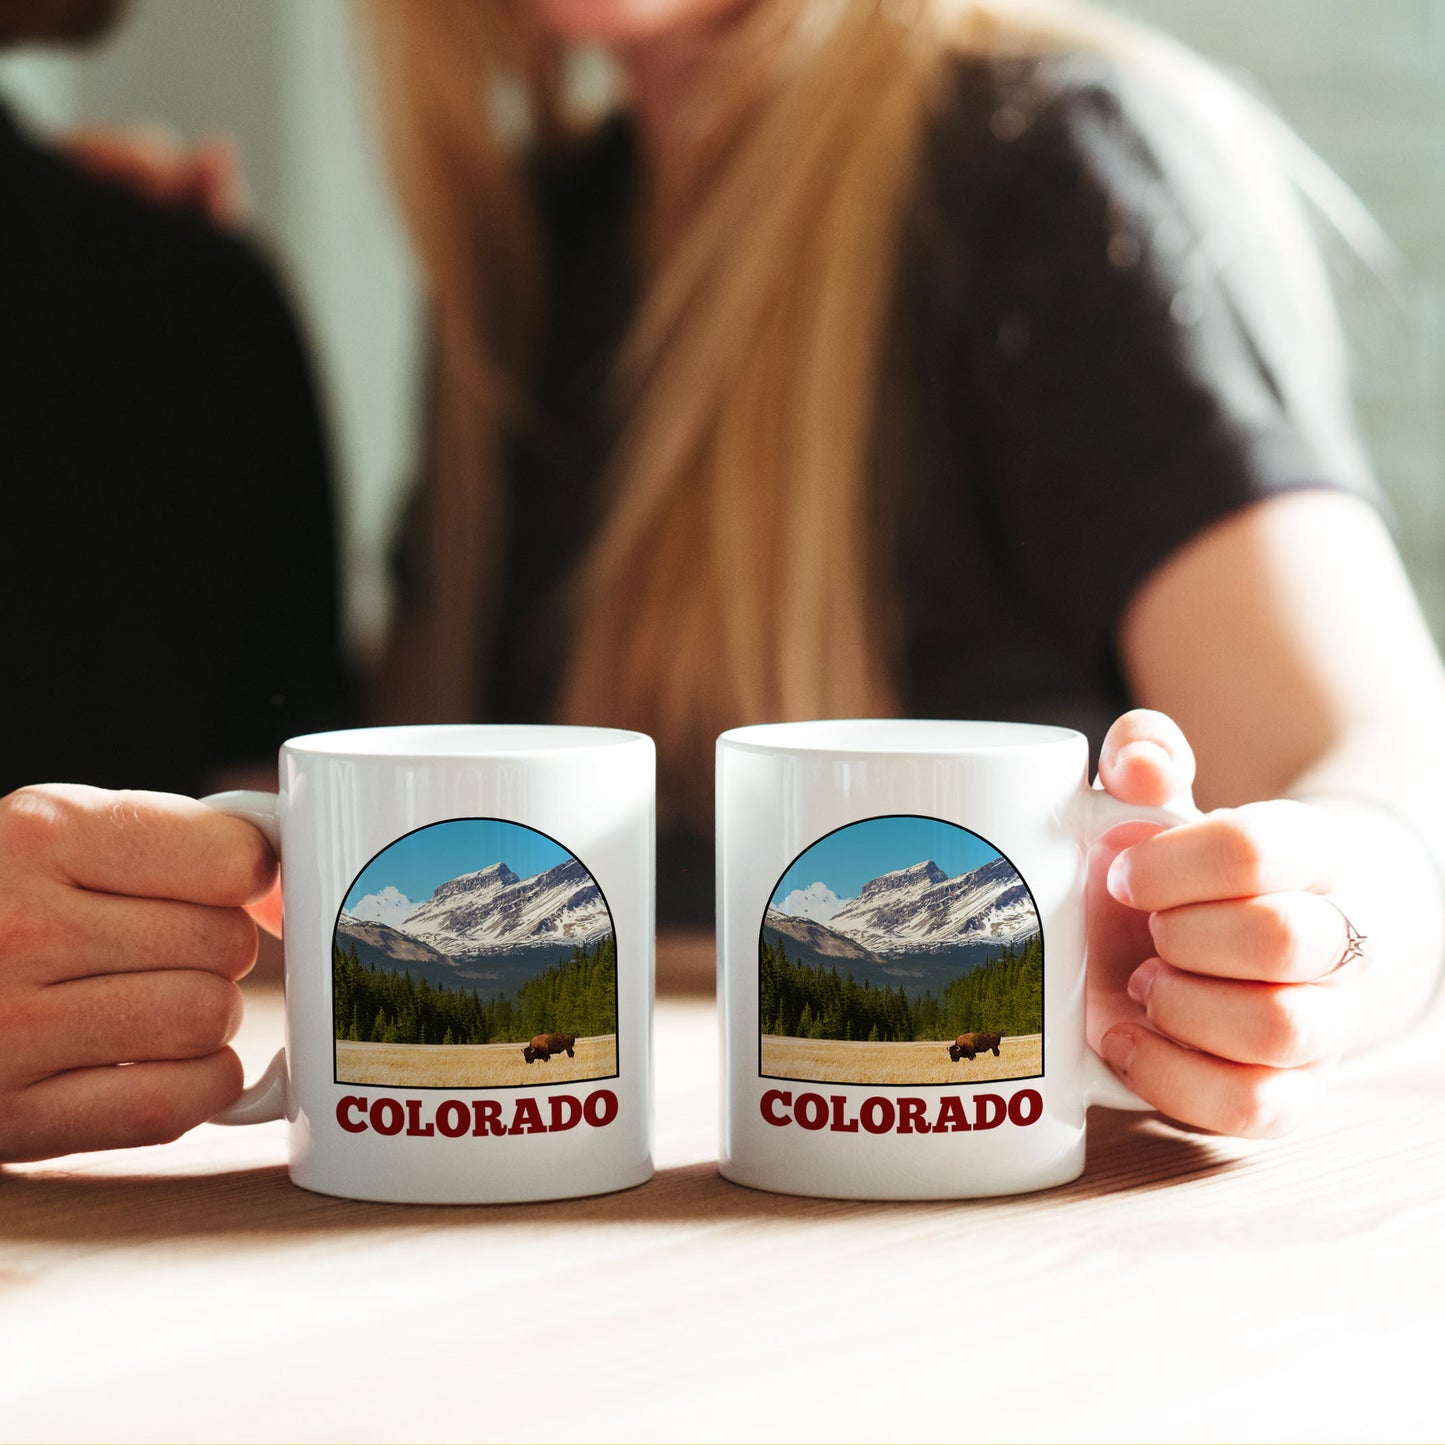 Colorado - Ceramic Mug - Vintaprints